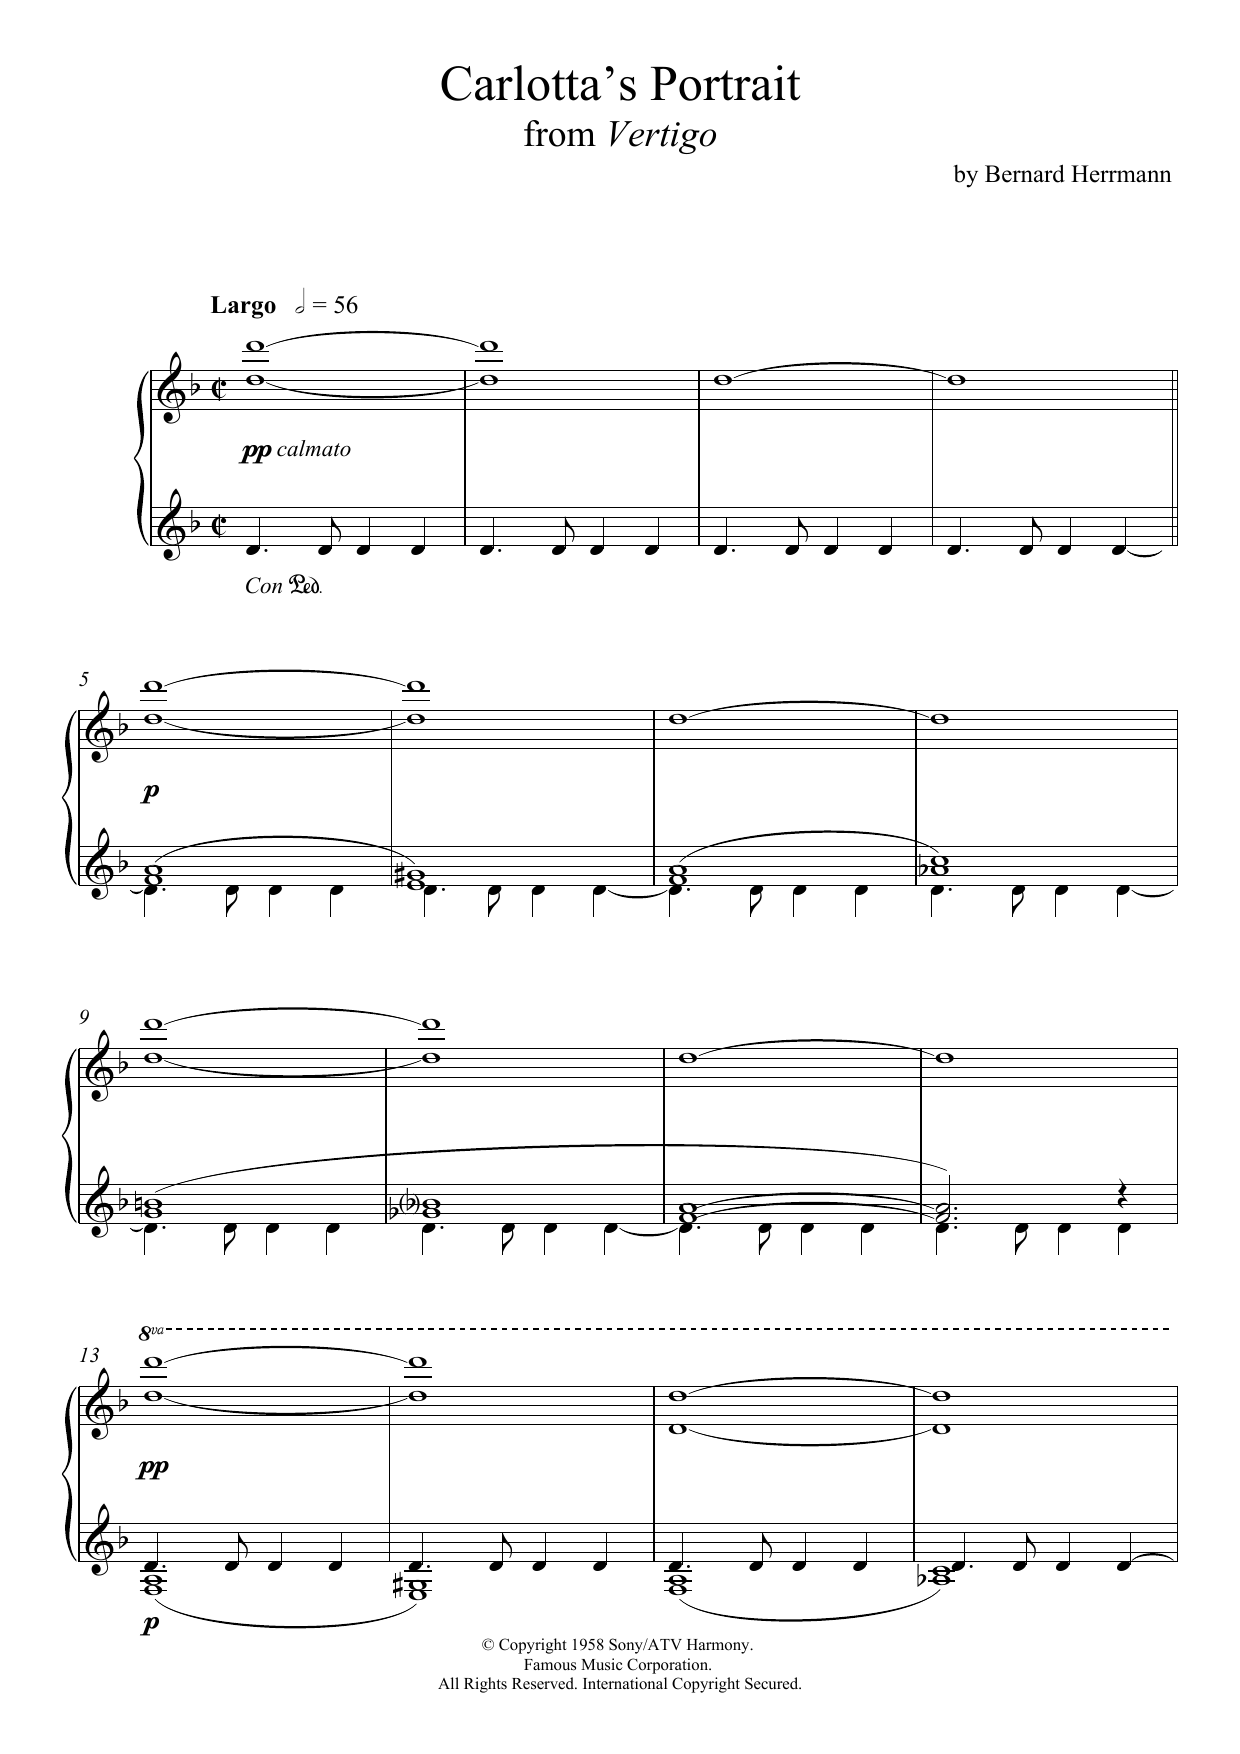 Bernard Herrmann Carlotta's Portrait From Vertigo Sheet Music Notes & Chords for Piano - Download or Print PDF